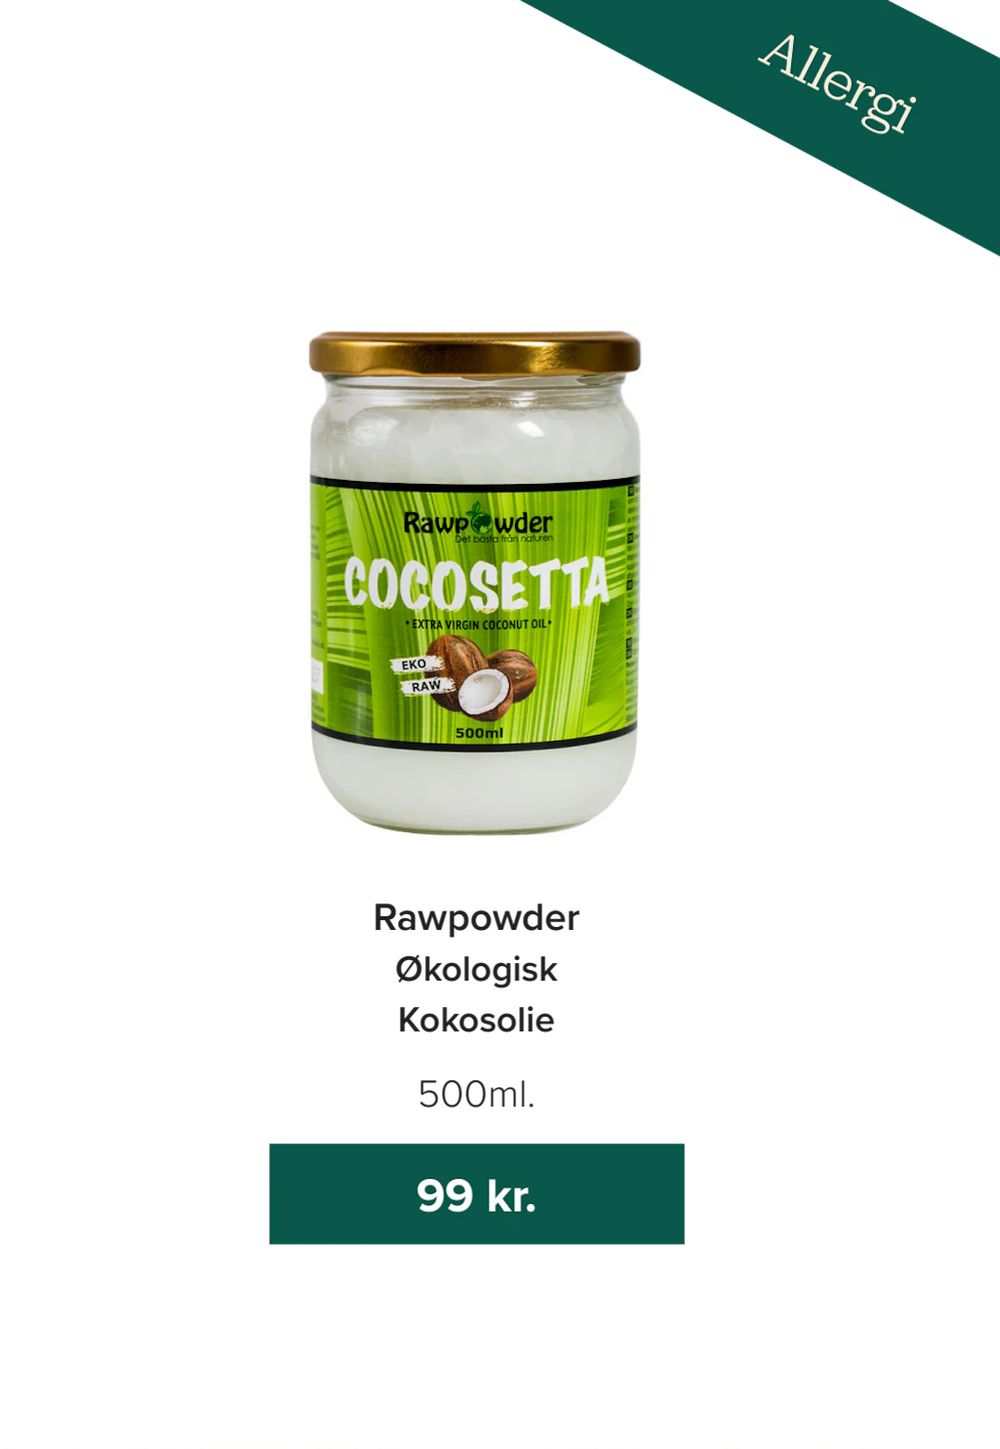 Tilbud på Rawpowder Økologisk Kokosolie fra Helsemin til 99 kr.